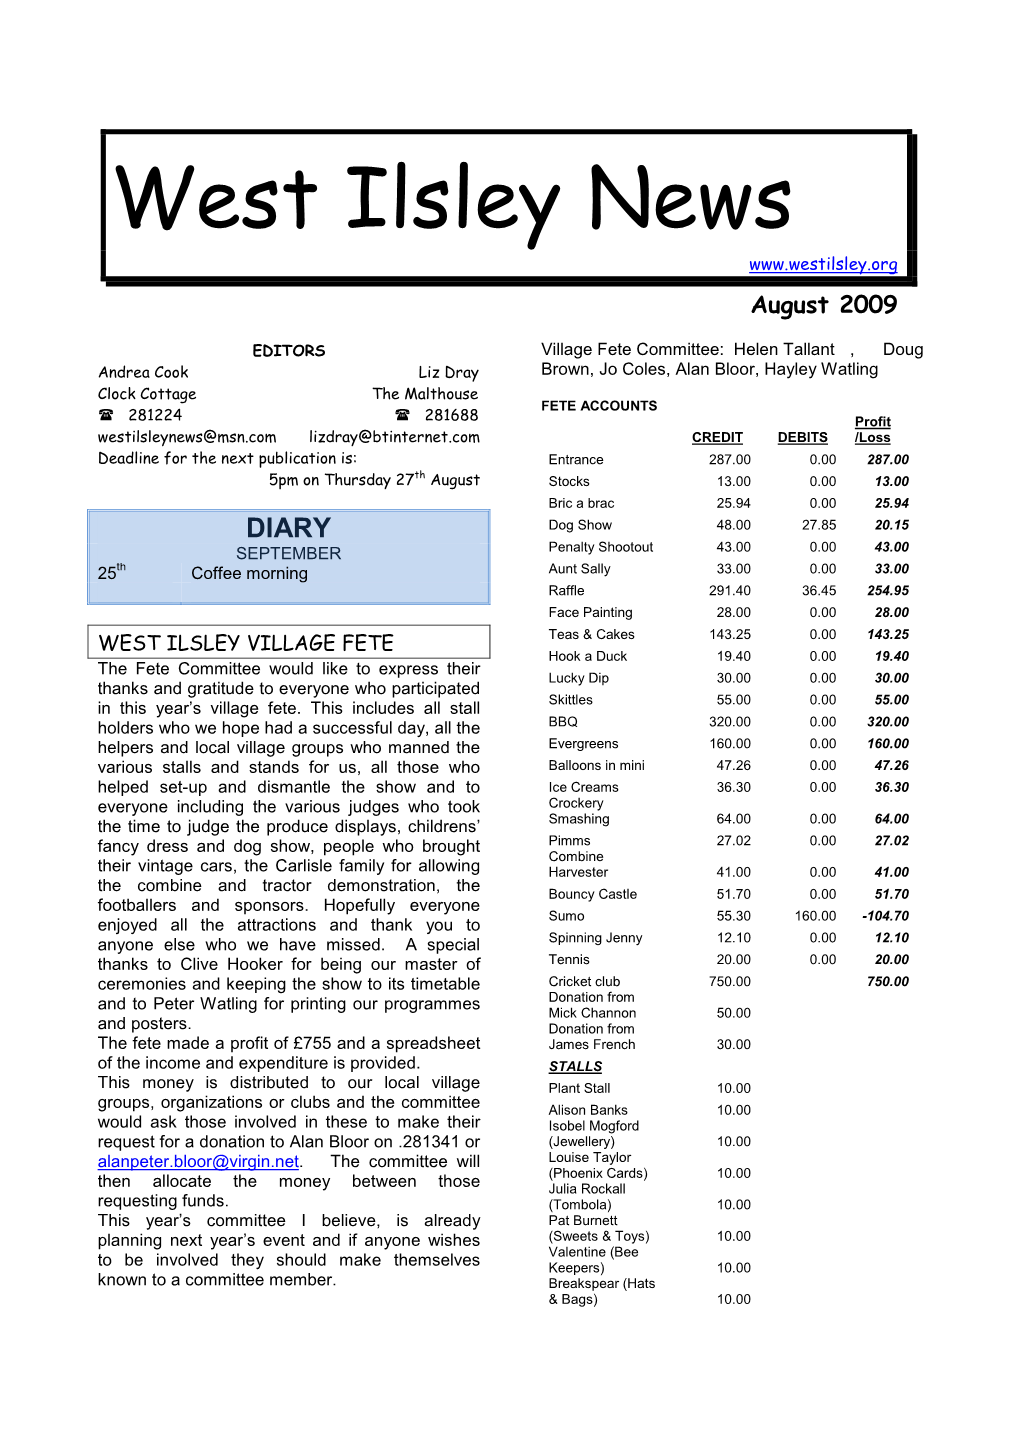 West Ilsley News August 2009